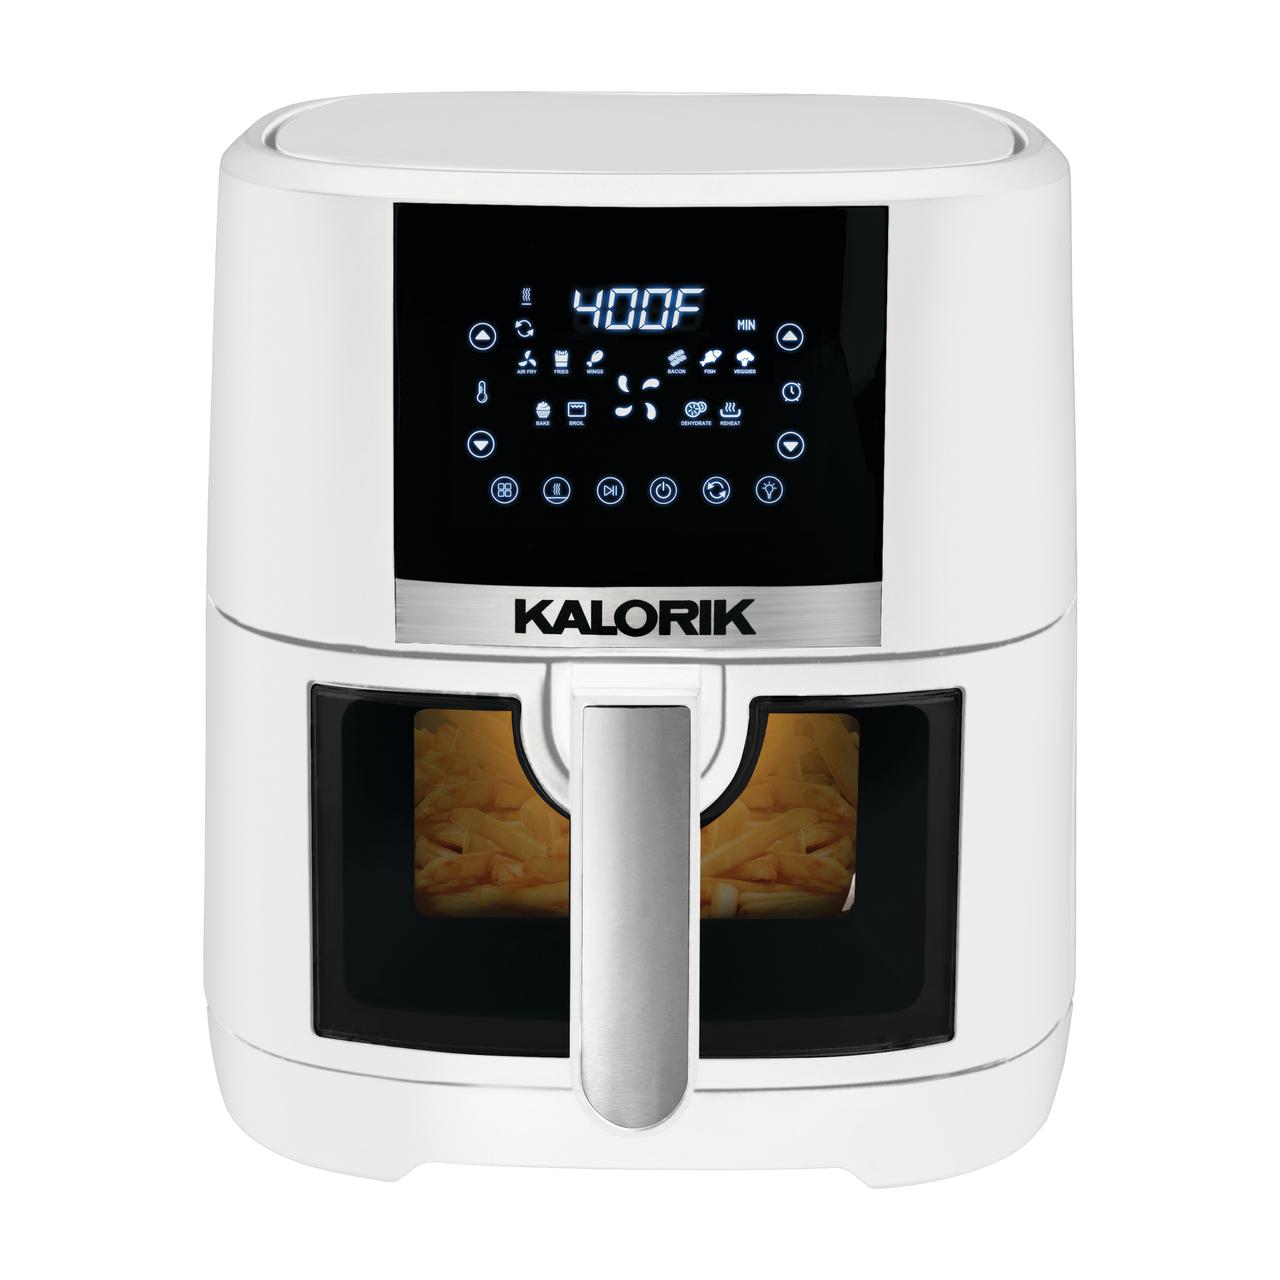 Kalorik® 5 Quart Air Fryer with Ceramic Coating and Window, New, 13.5 in - image 1 of 12